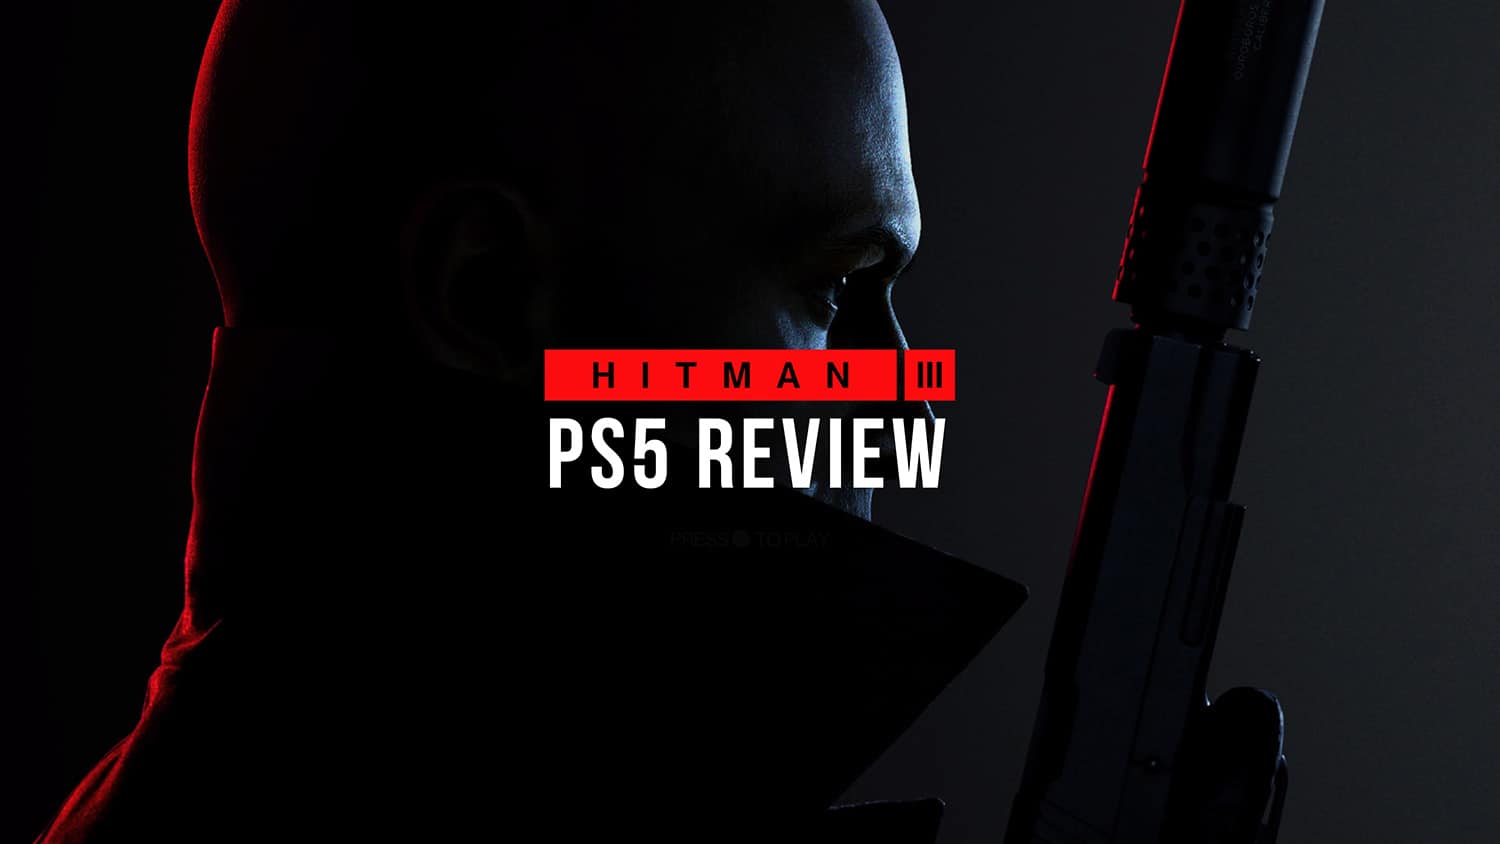 Hitman 3 PS5 Review: A masterful escalation - KAT CLAY